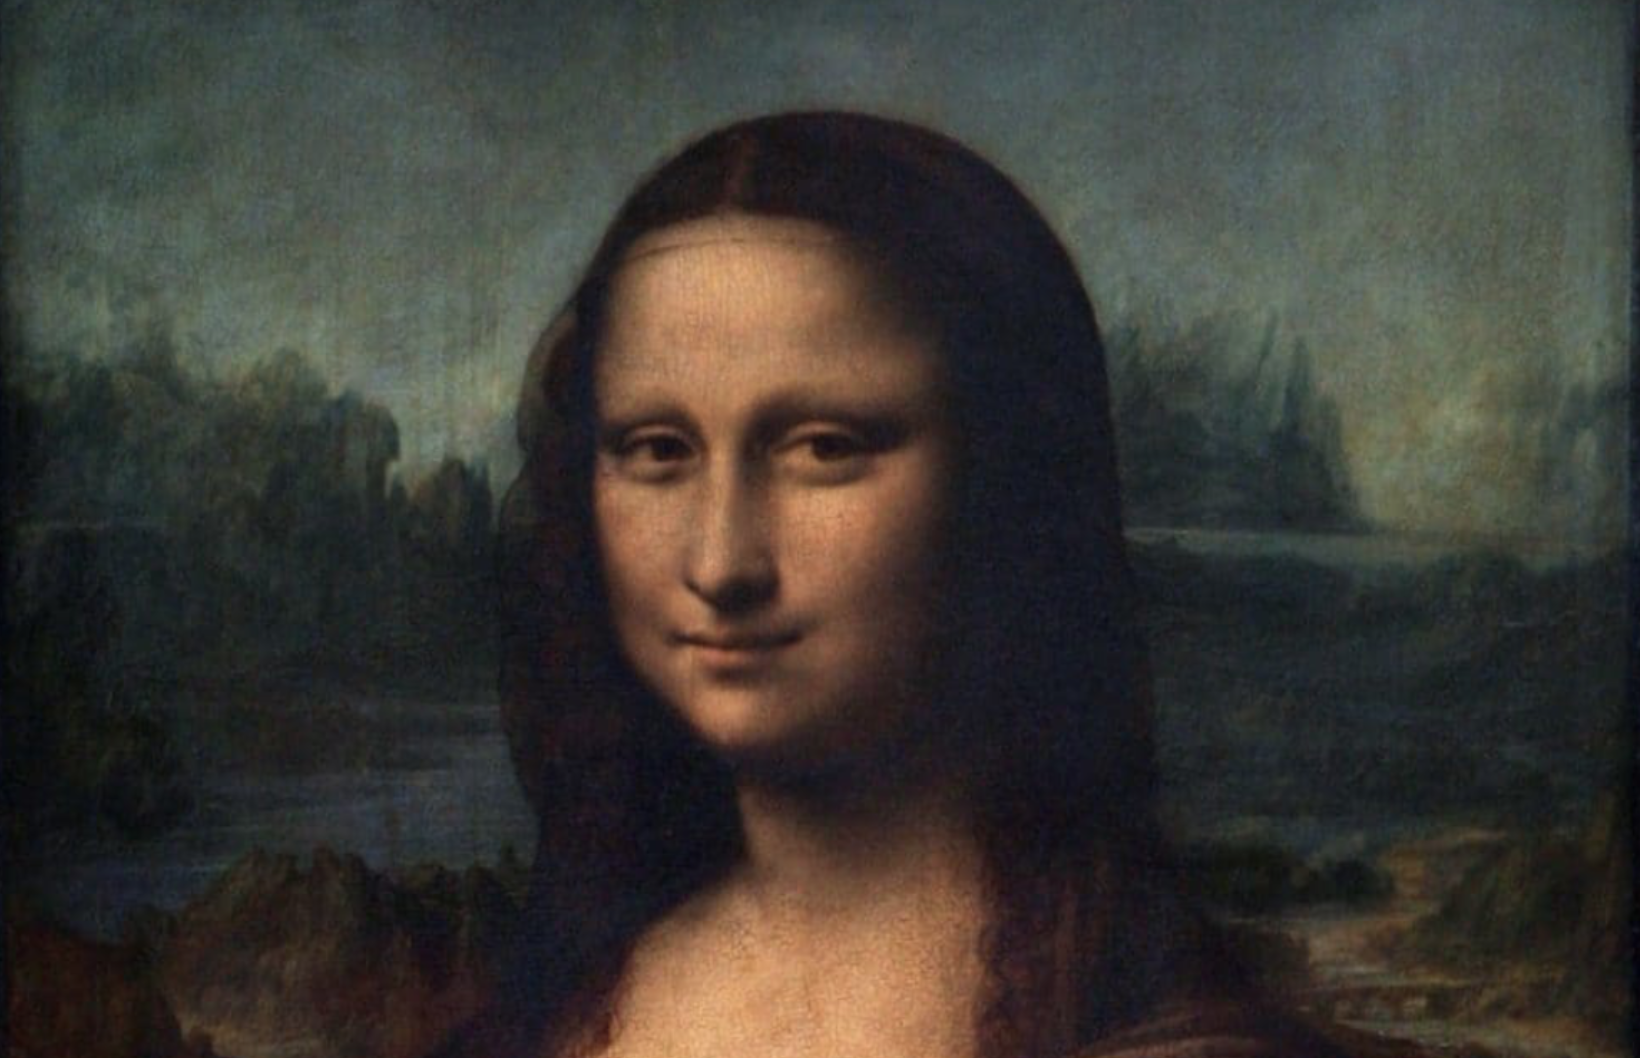 Mona Lisa HD Wallpapers Free